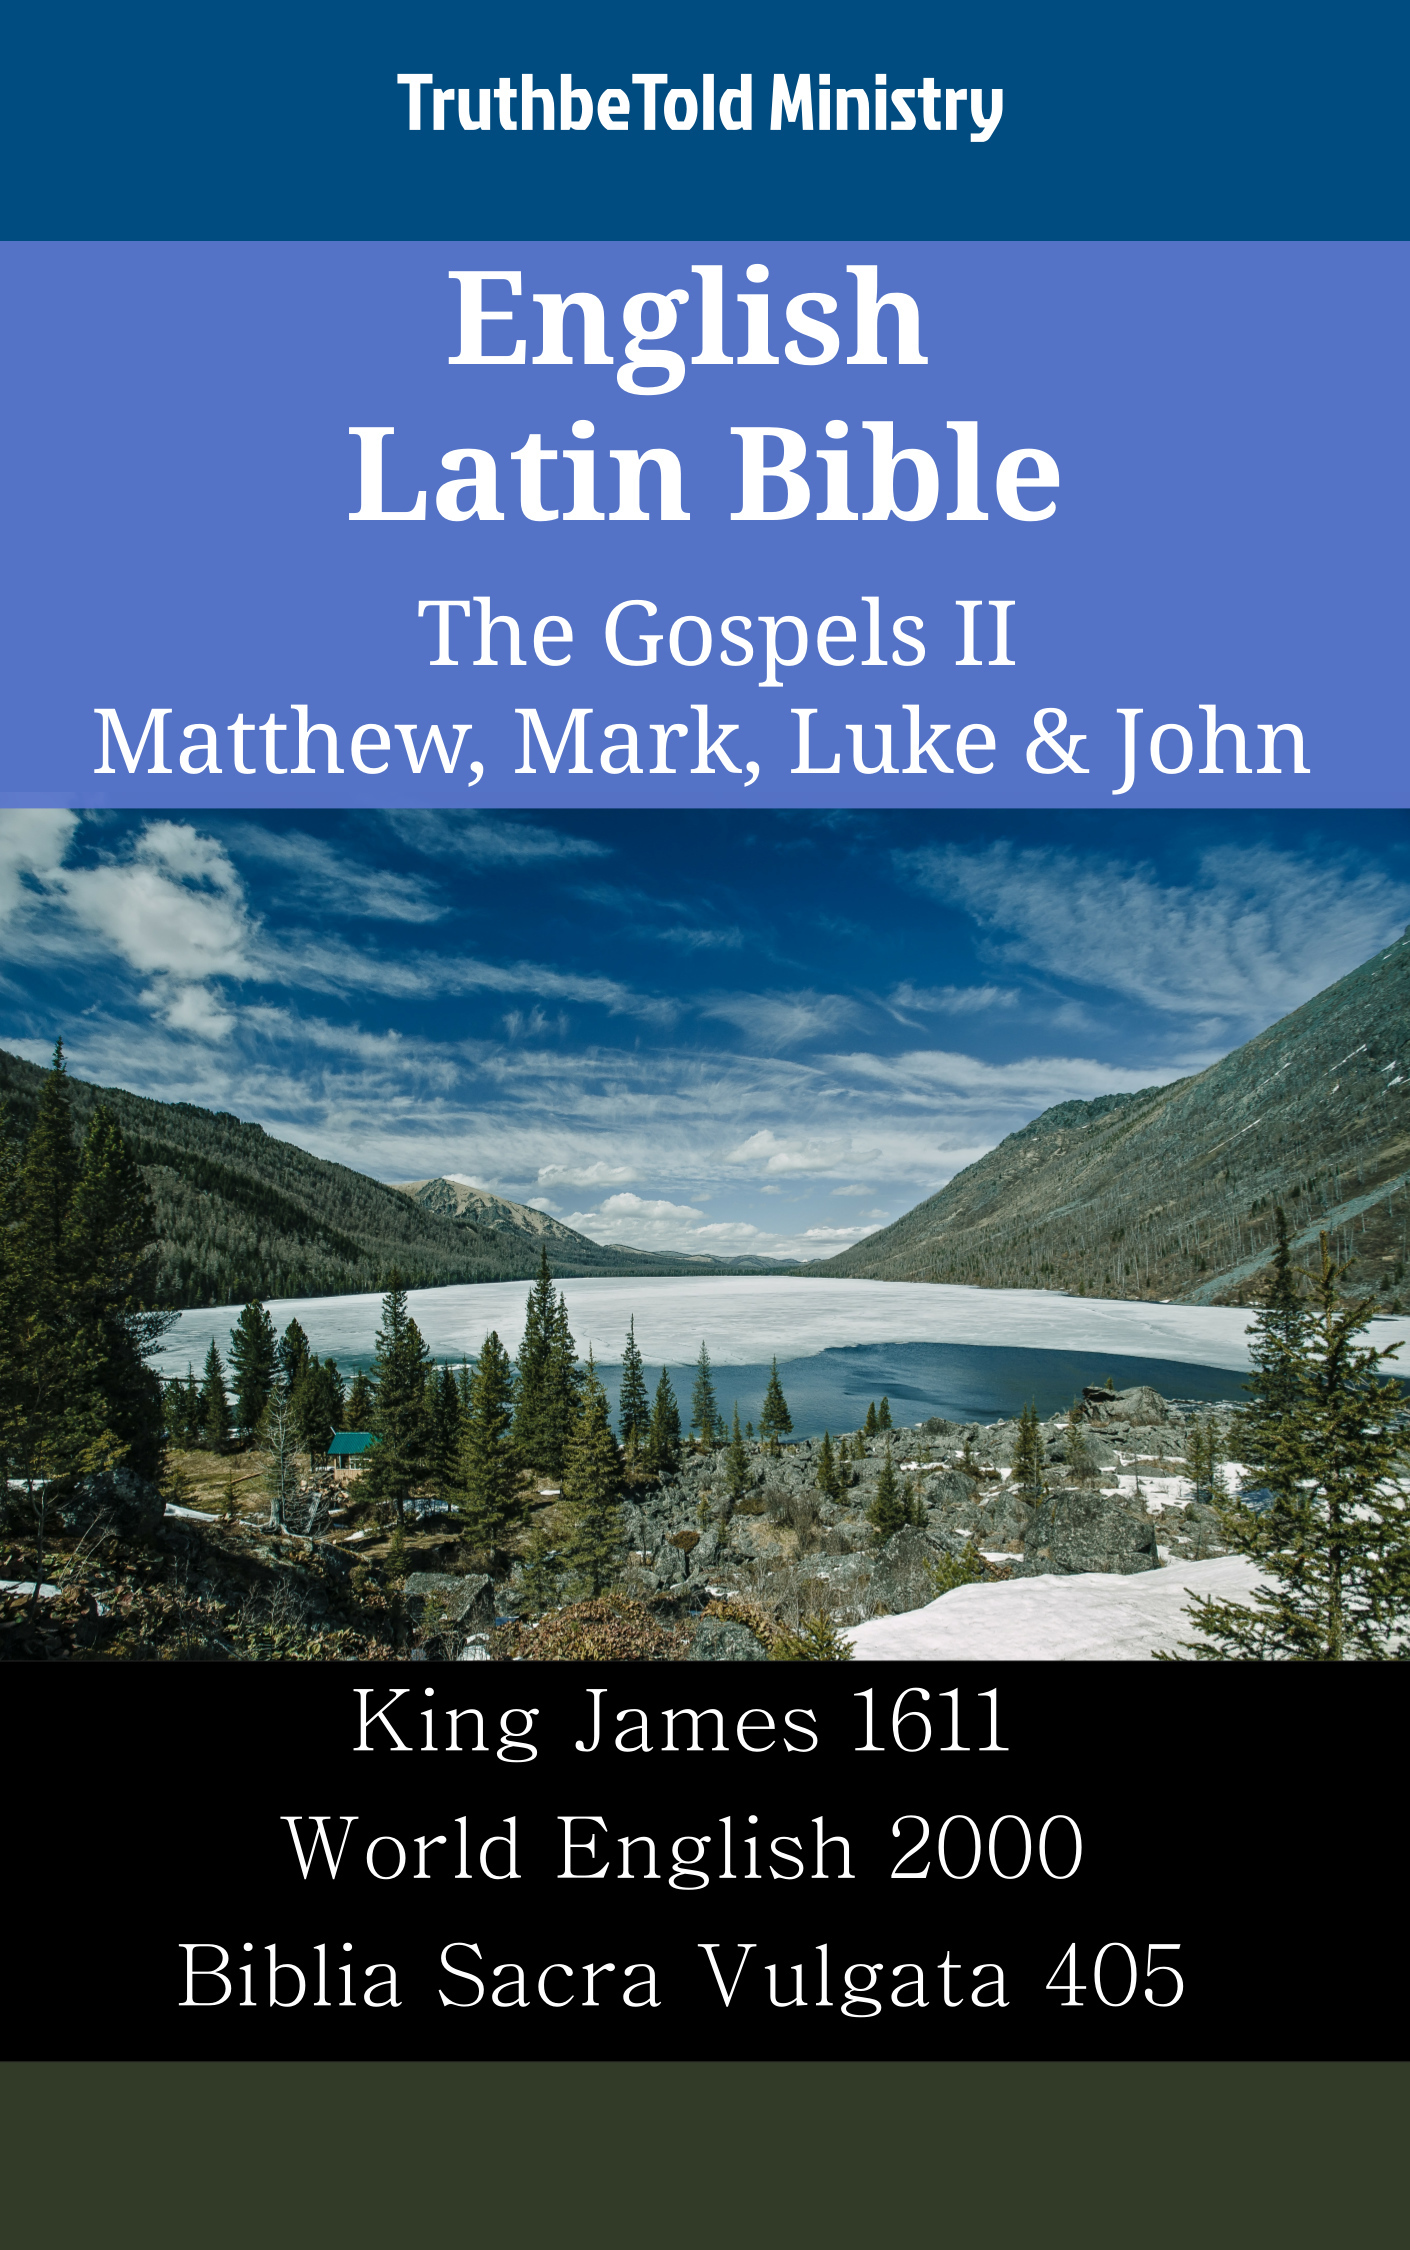 English Latin Bible - The Gospels II - Matthew, Mark, Luke & John